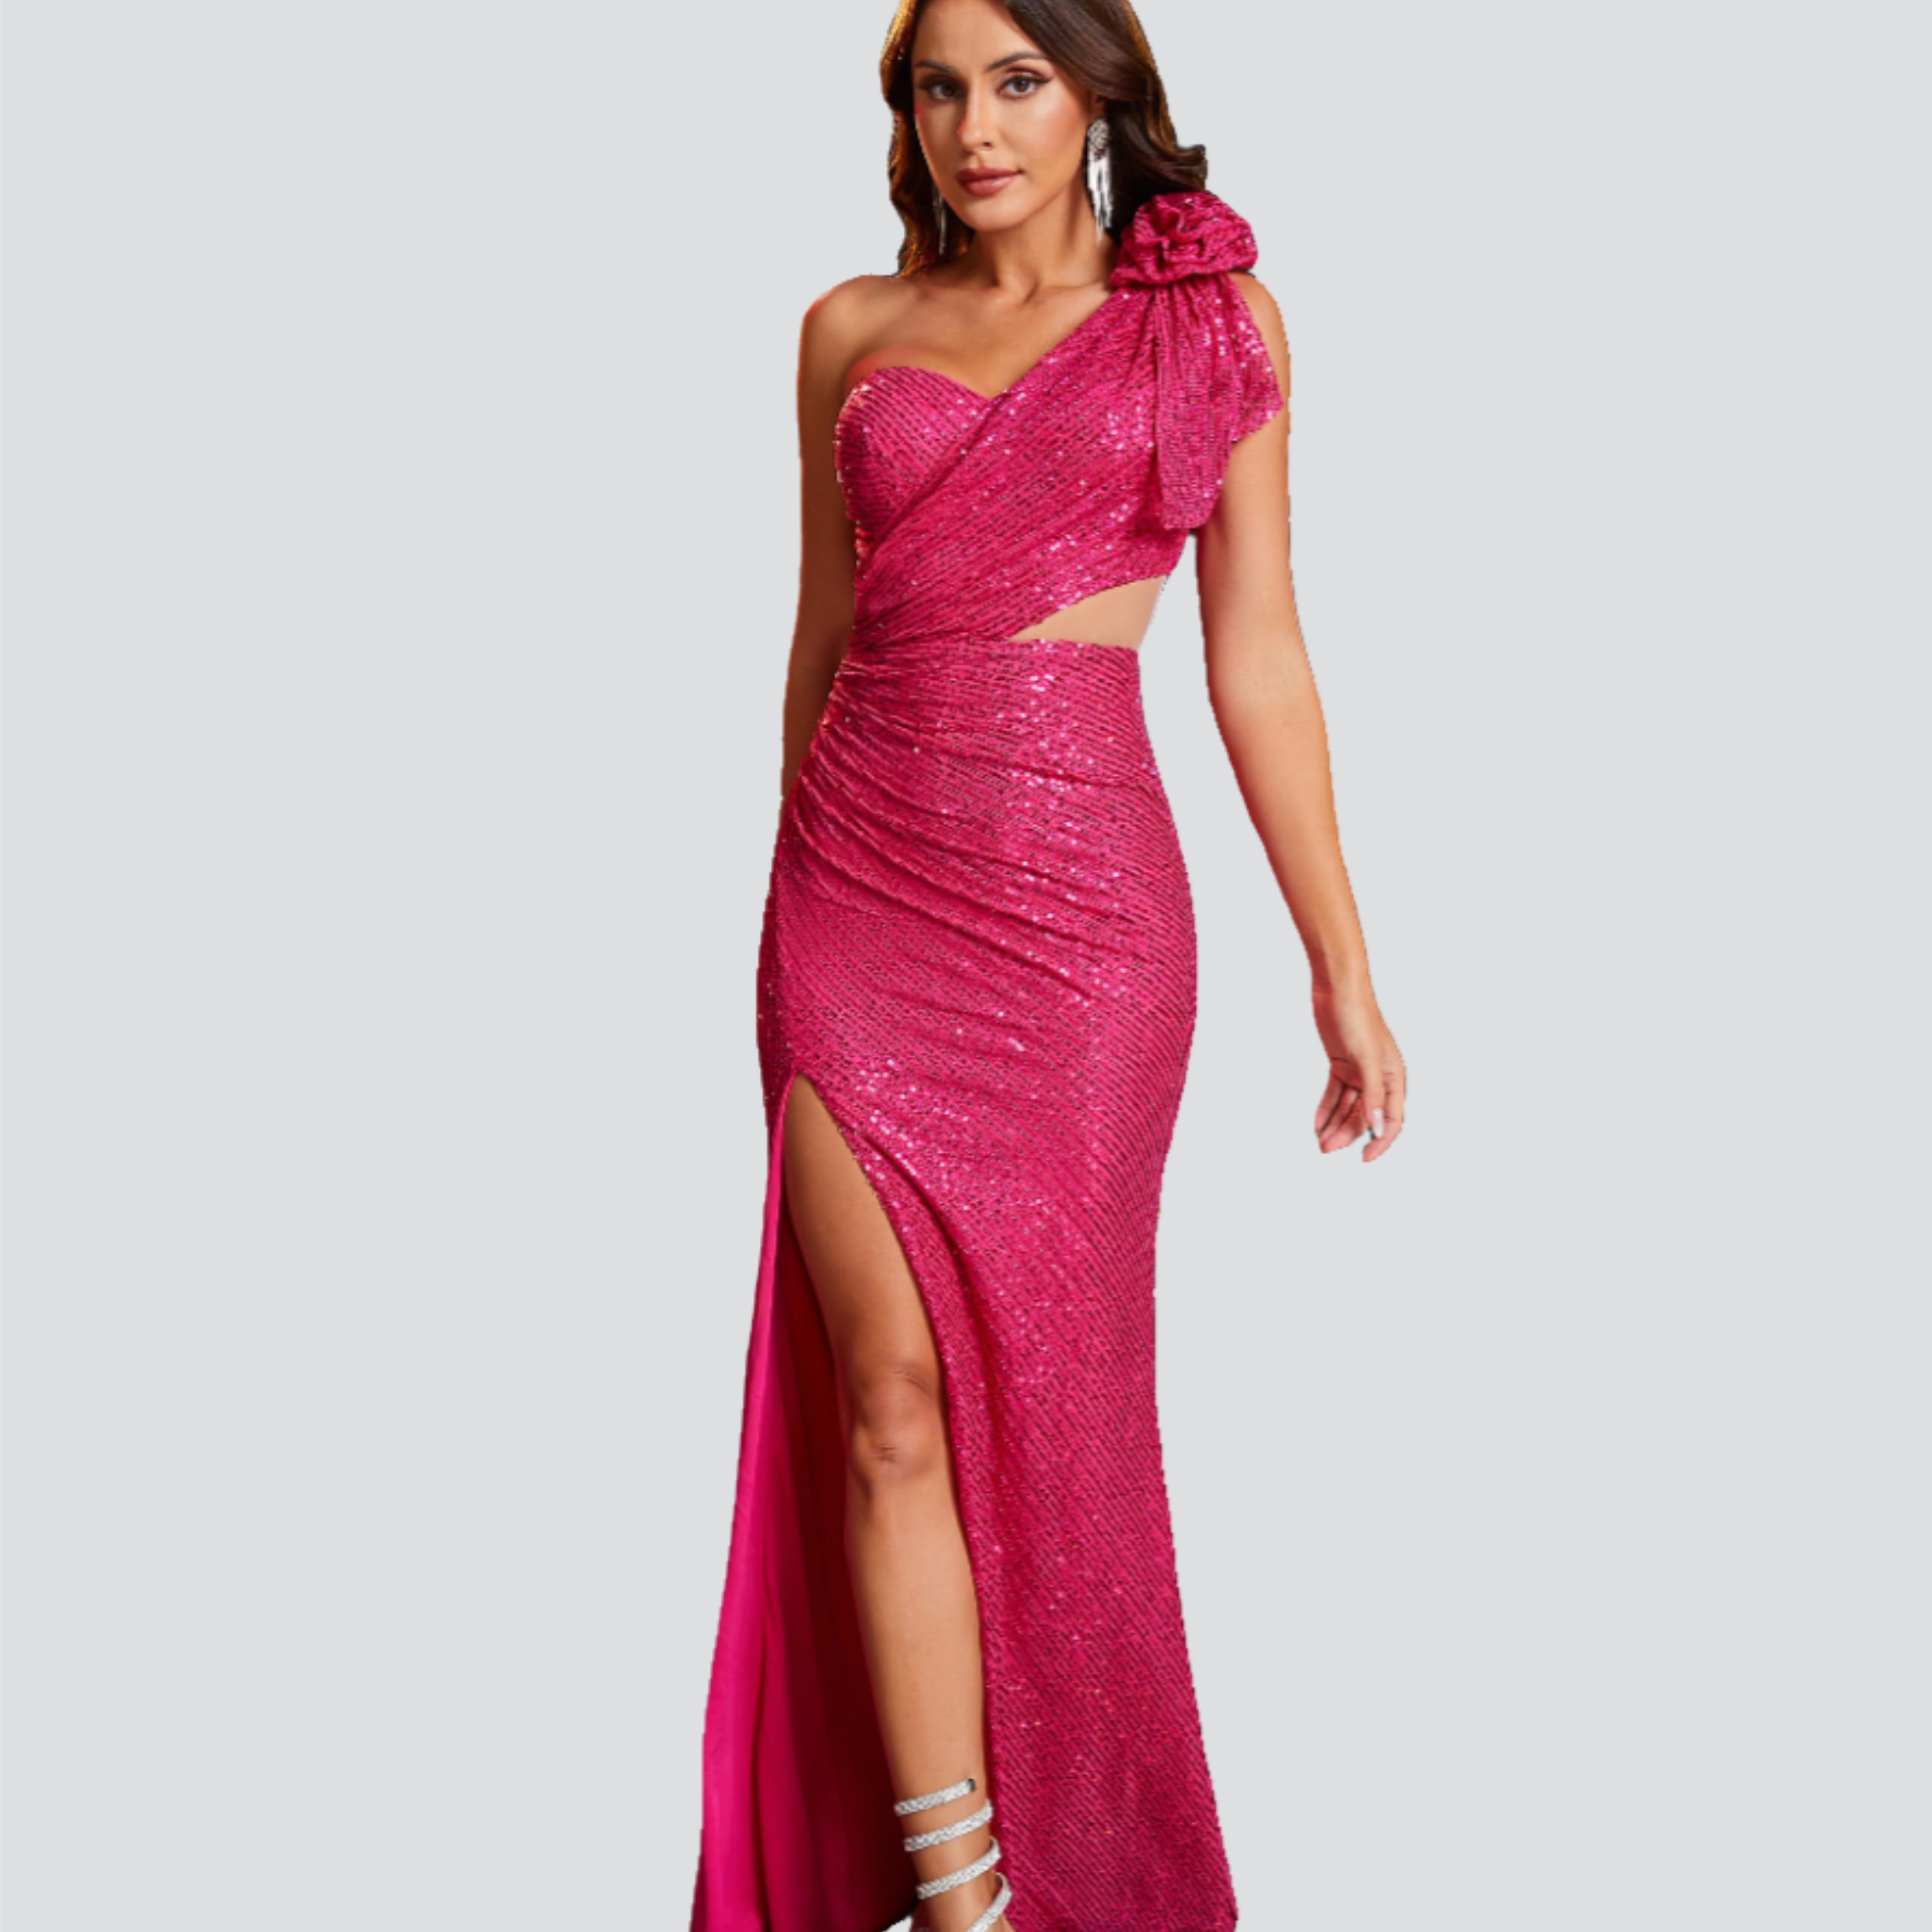 One Shoulder Appliqued Red Sequin Prom Dress RM20848